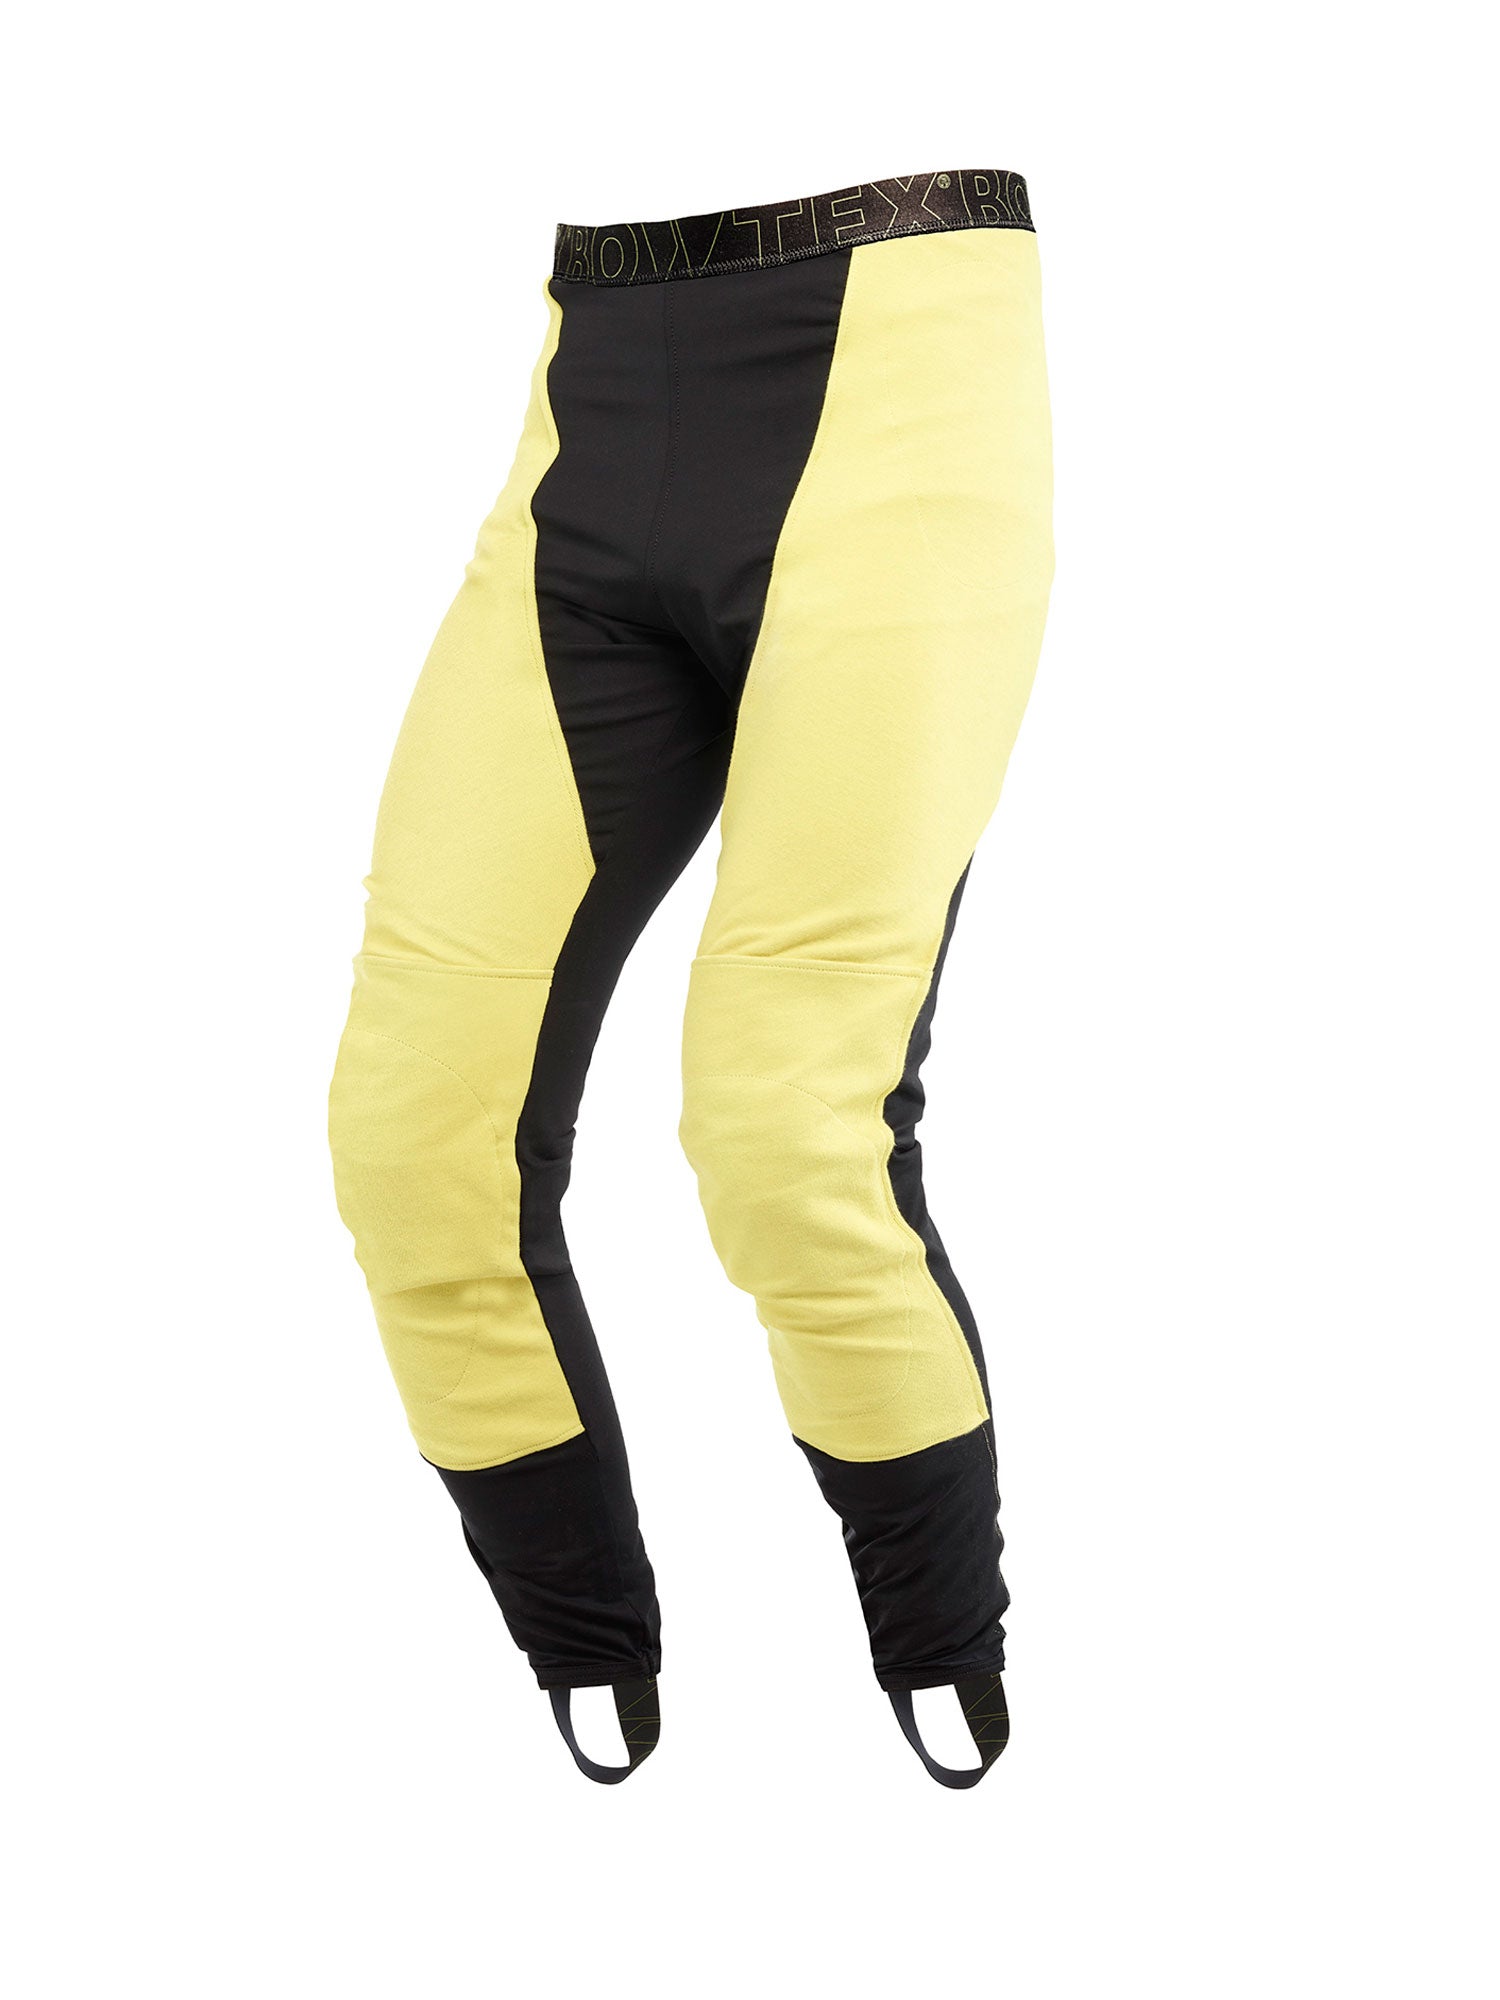 Bowtex - Standard R motorcycle legging - Biker Outfit